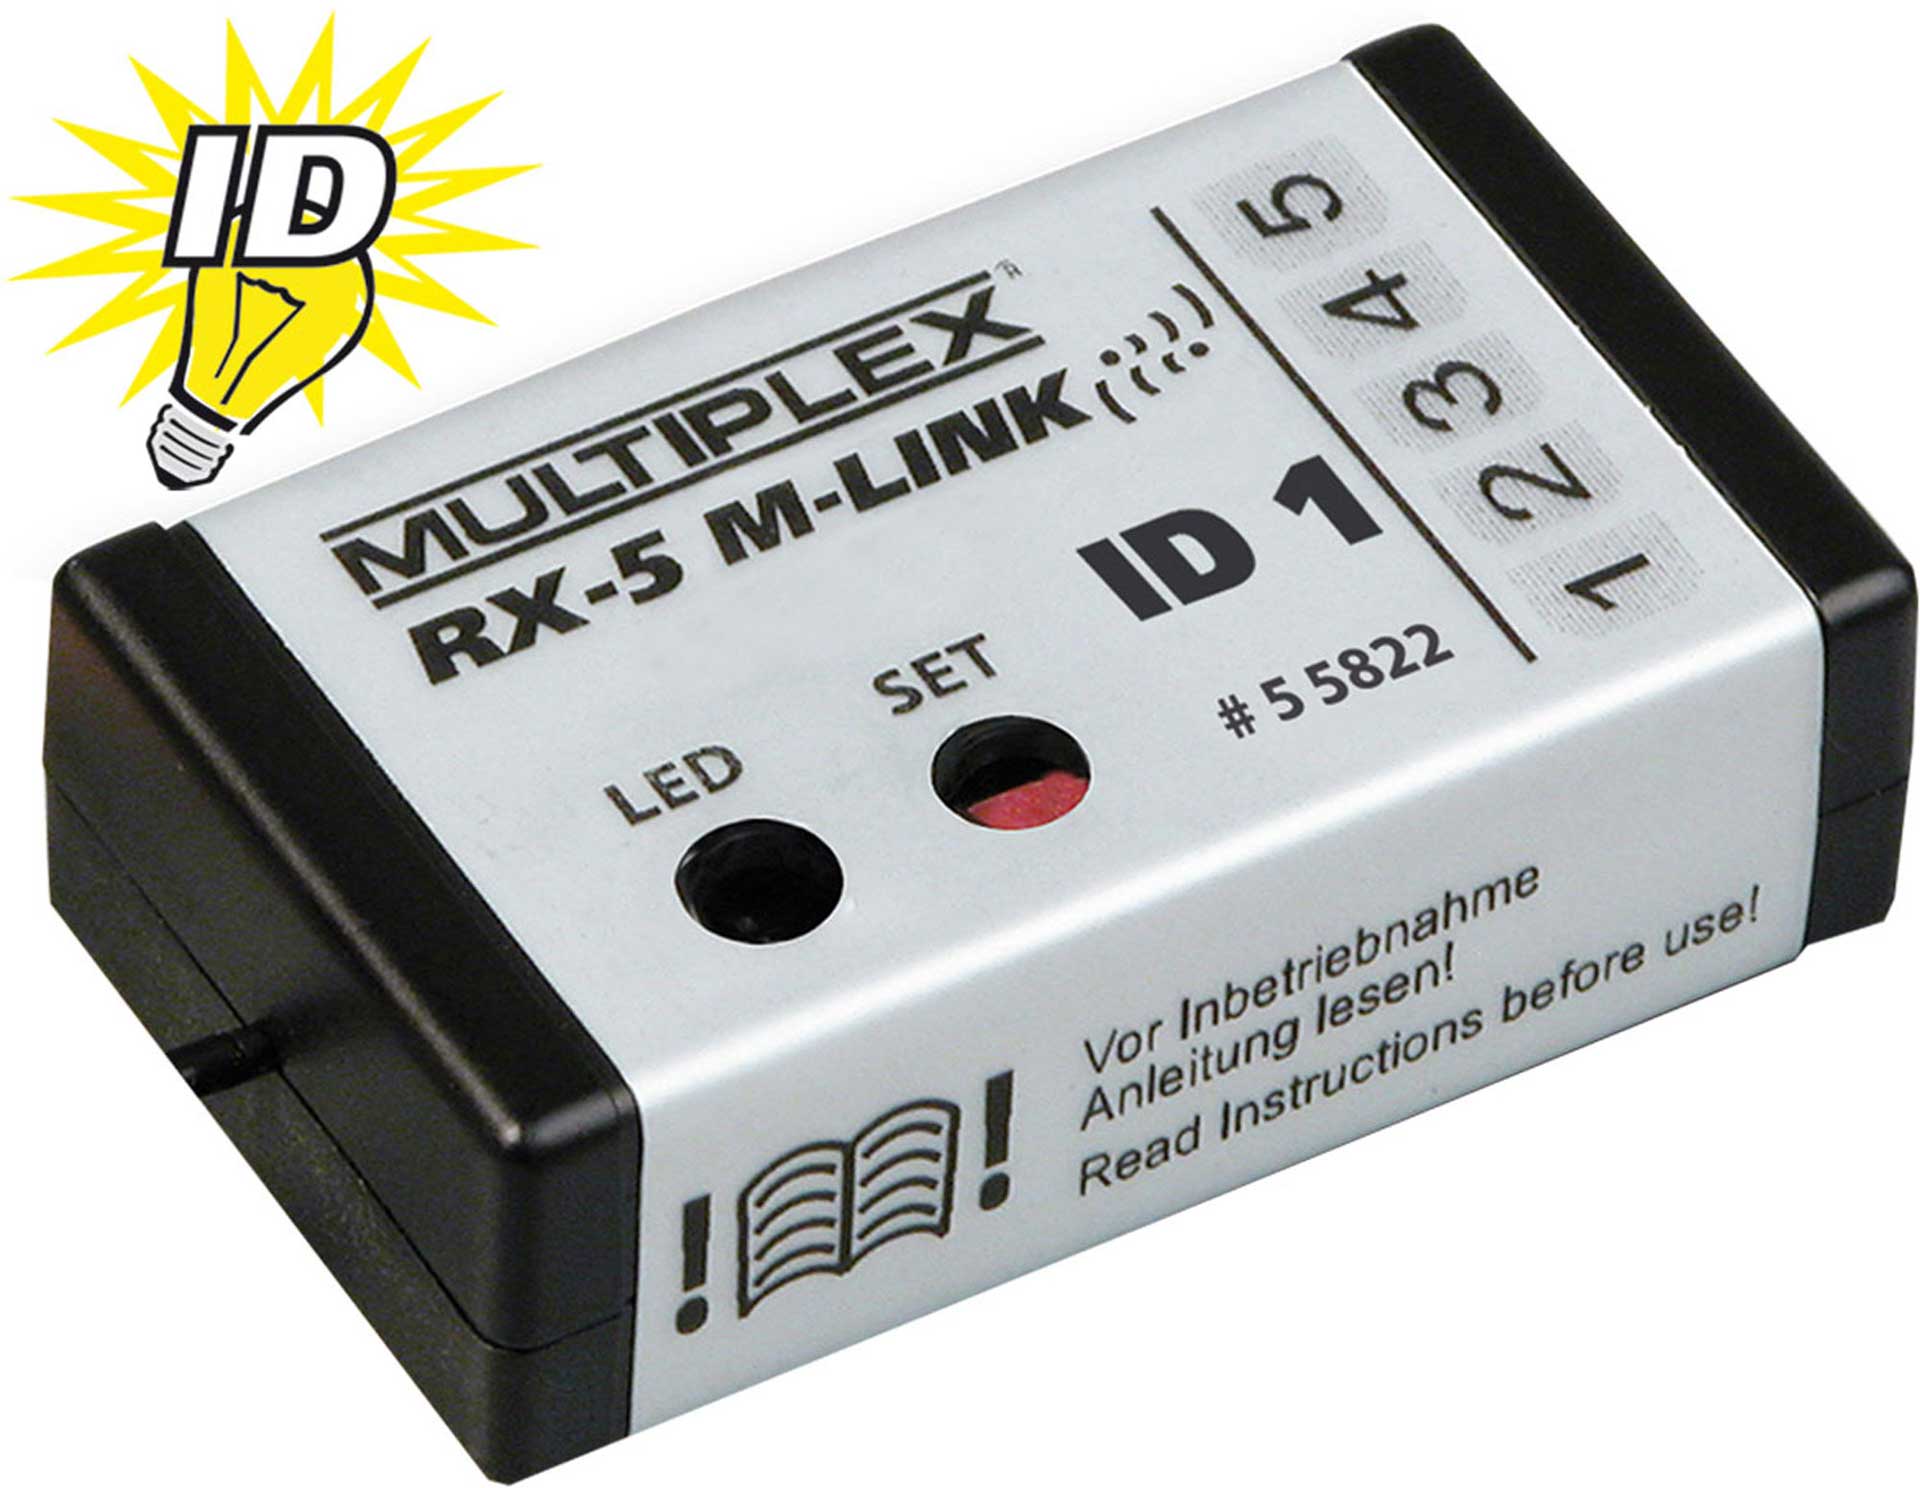 MULTIPLEX RX-5 SMART ID 1 "FREE" 2,4GHZ M-LINK